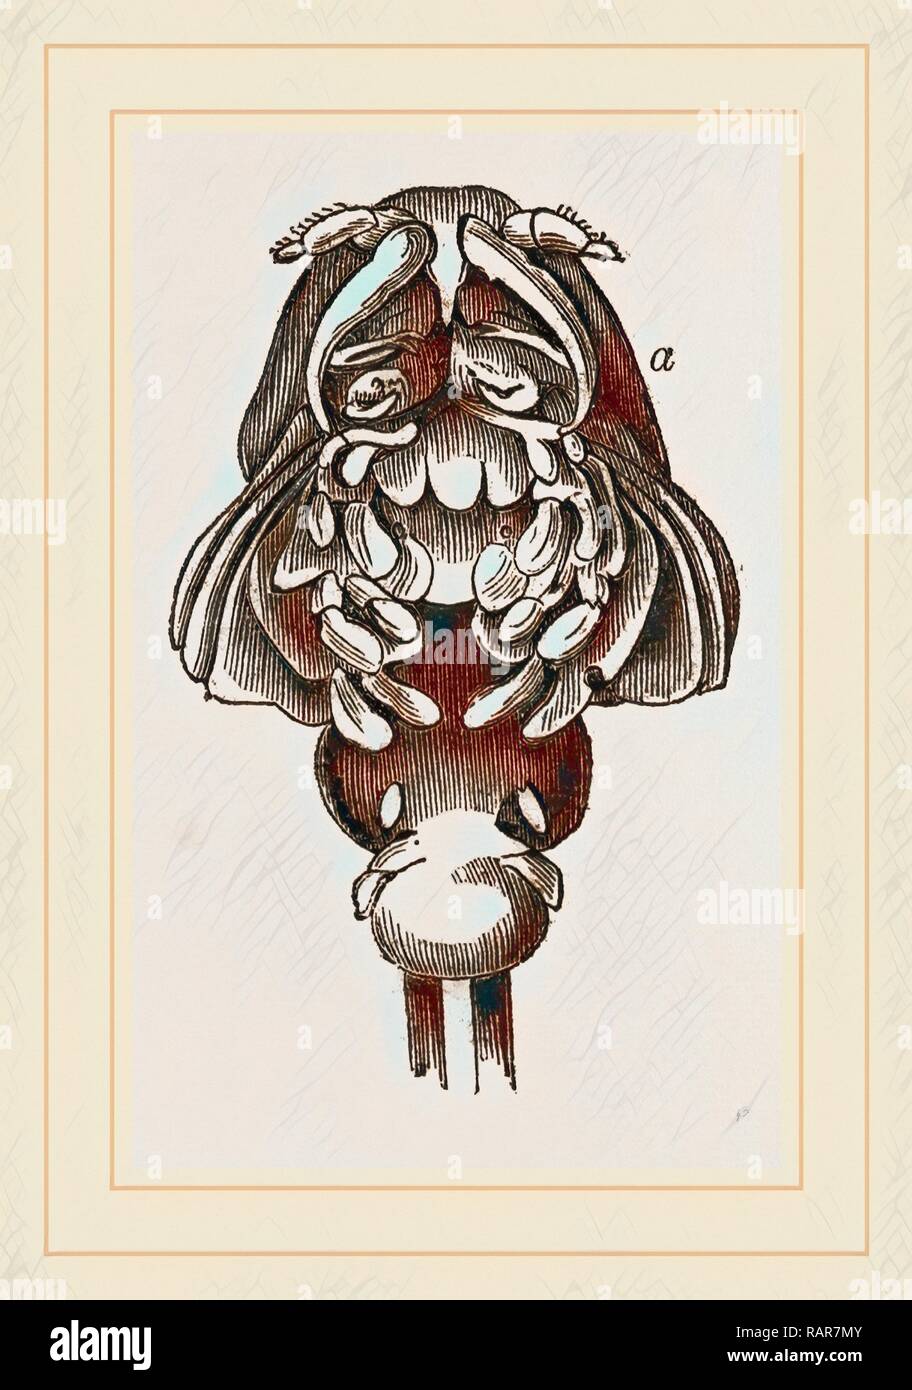 Phyllophora cornuta. Reimagined by Gibon. Classic art with a modern twist reimagined Stock Photo